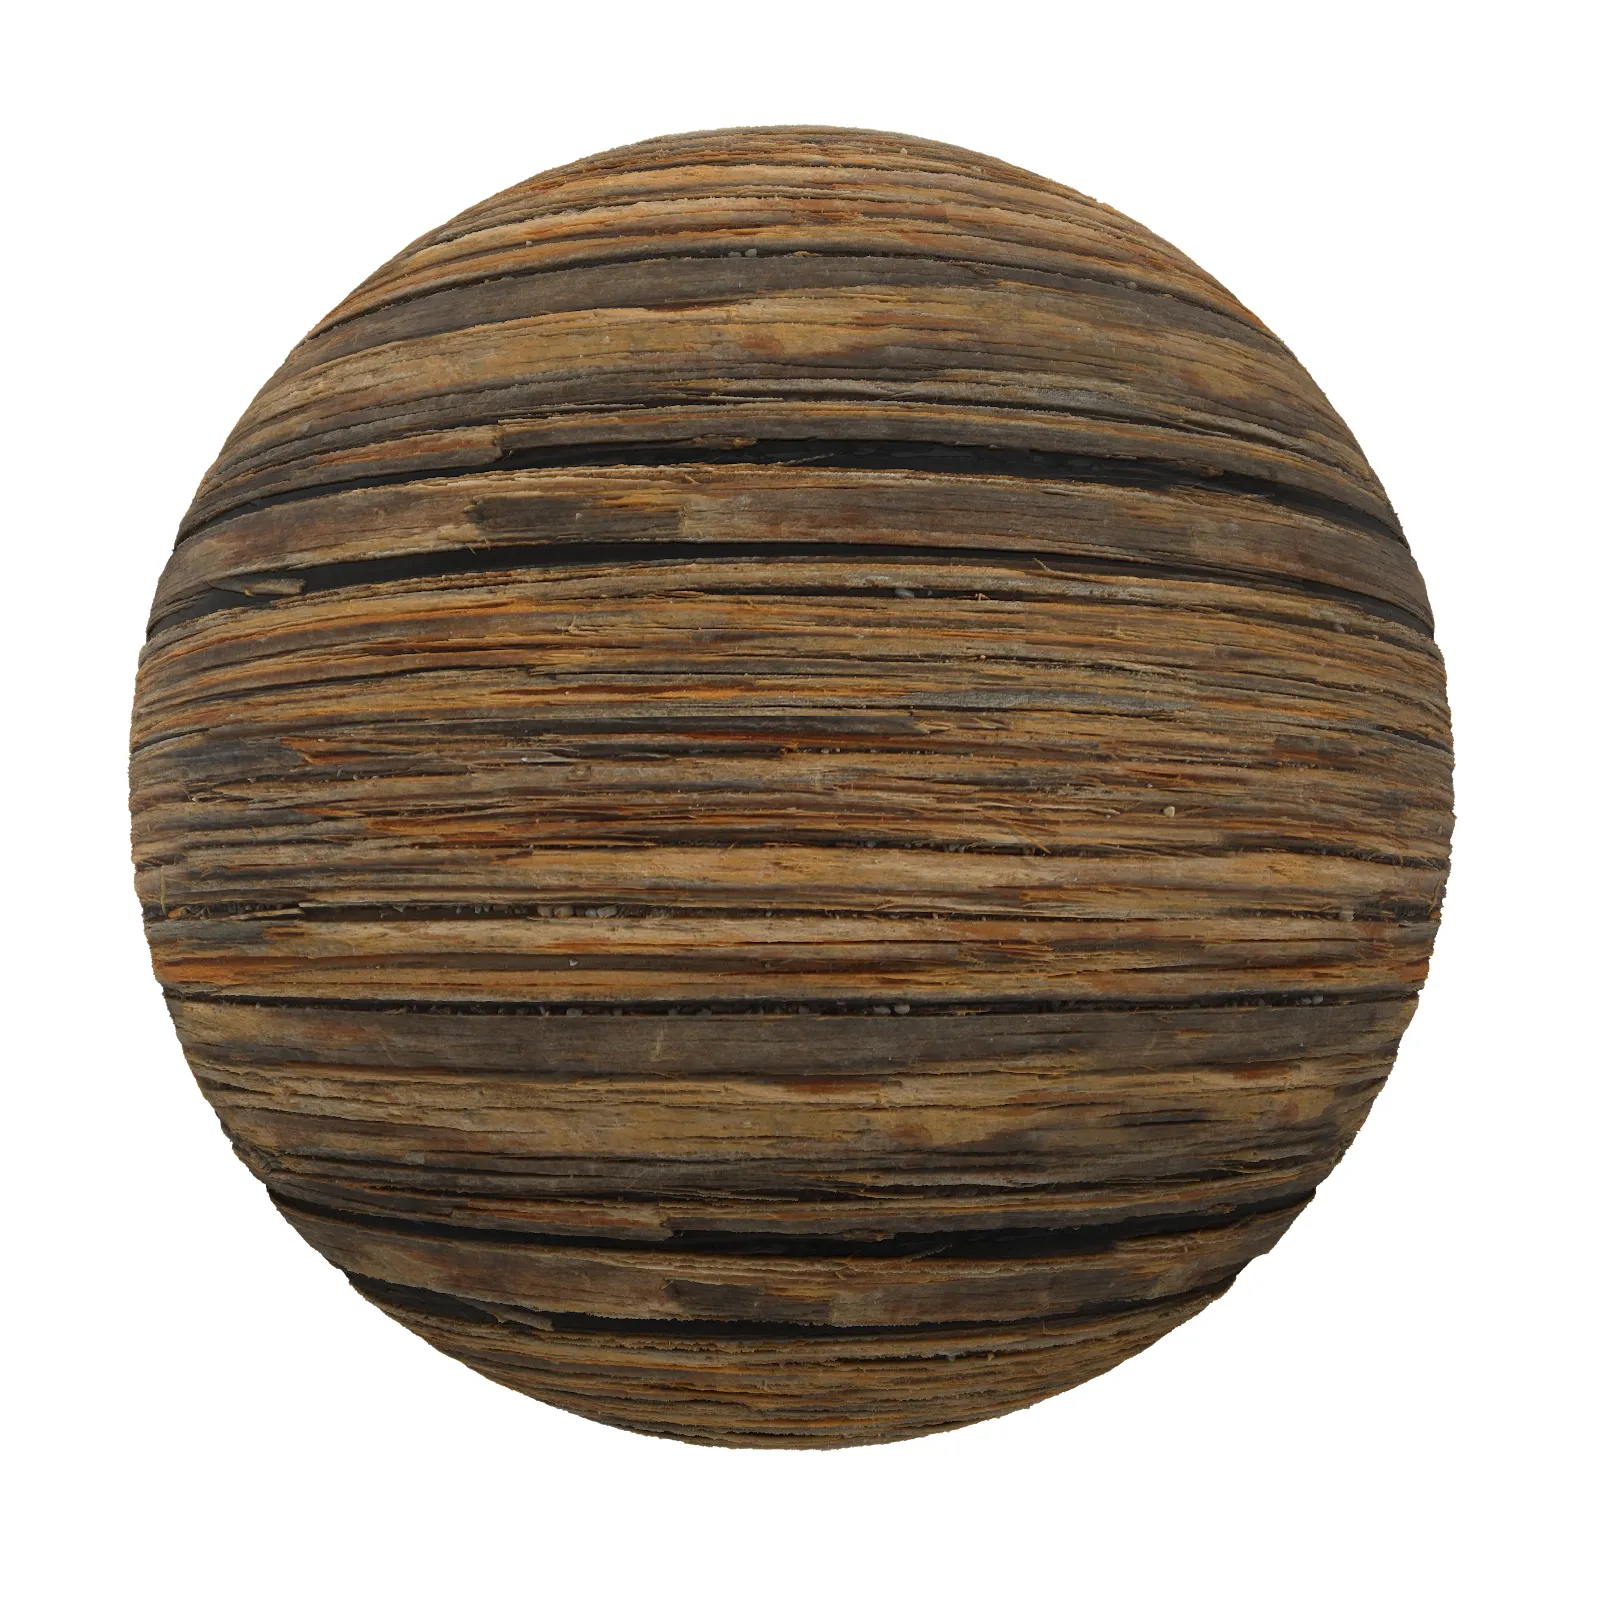 3ds Max Files – Texture – 8 – Wood Texture – 112 – Wood Texture by Minh Nguyen